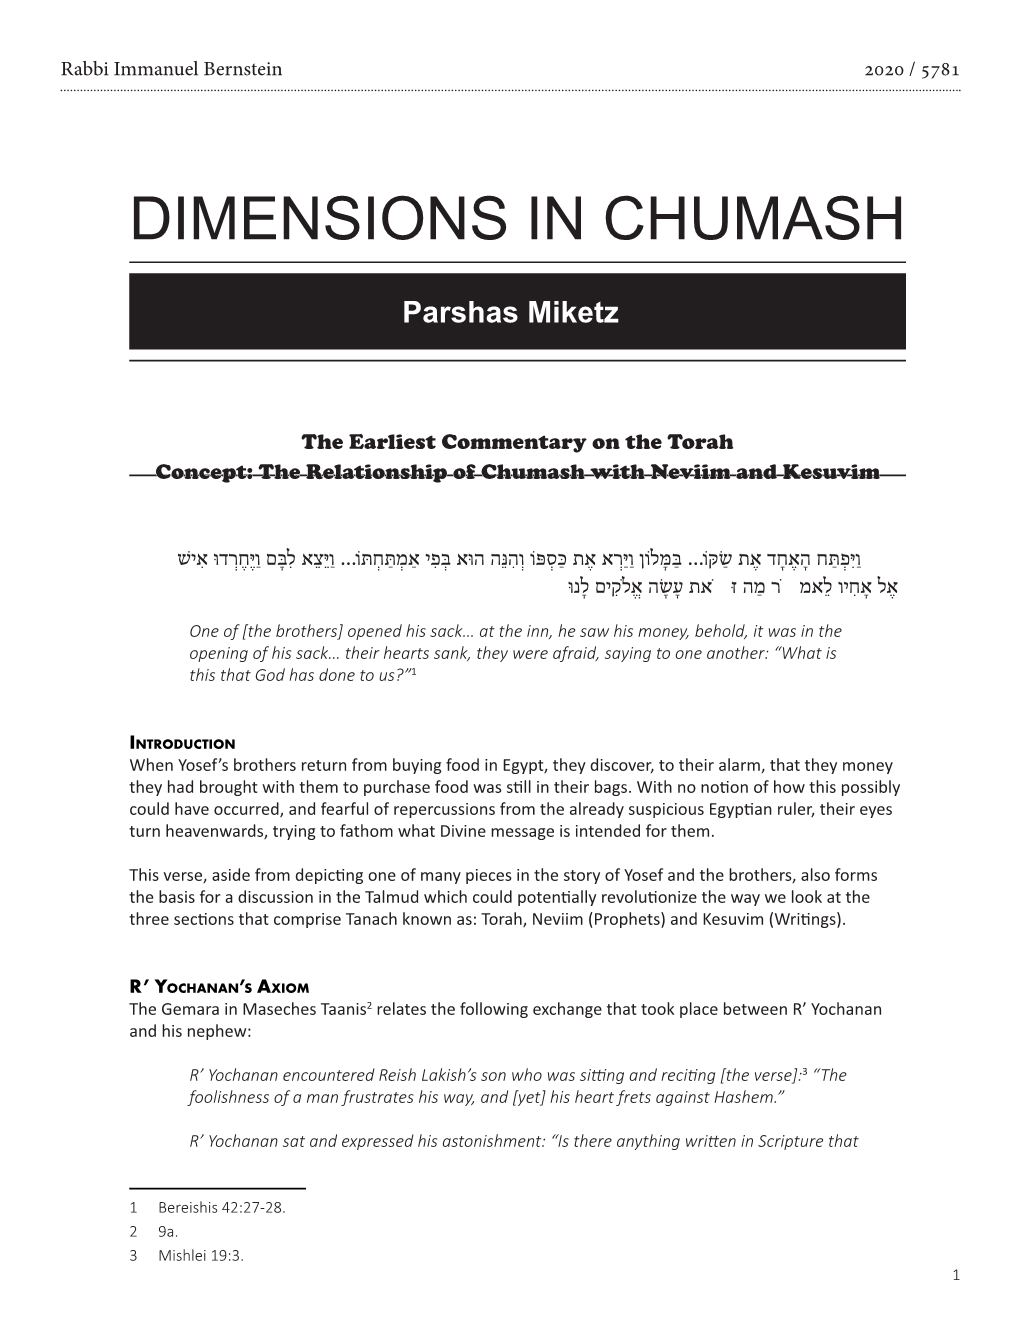 Dimensions in Chumash